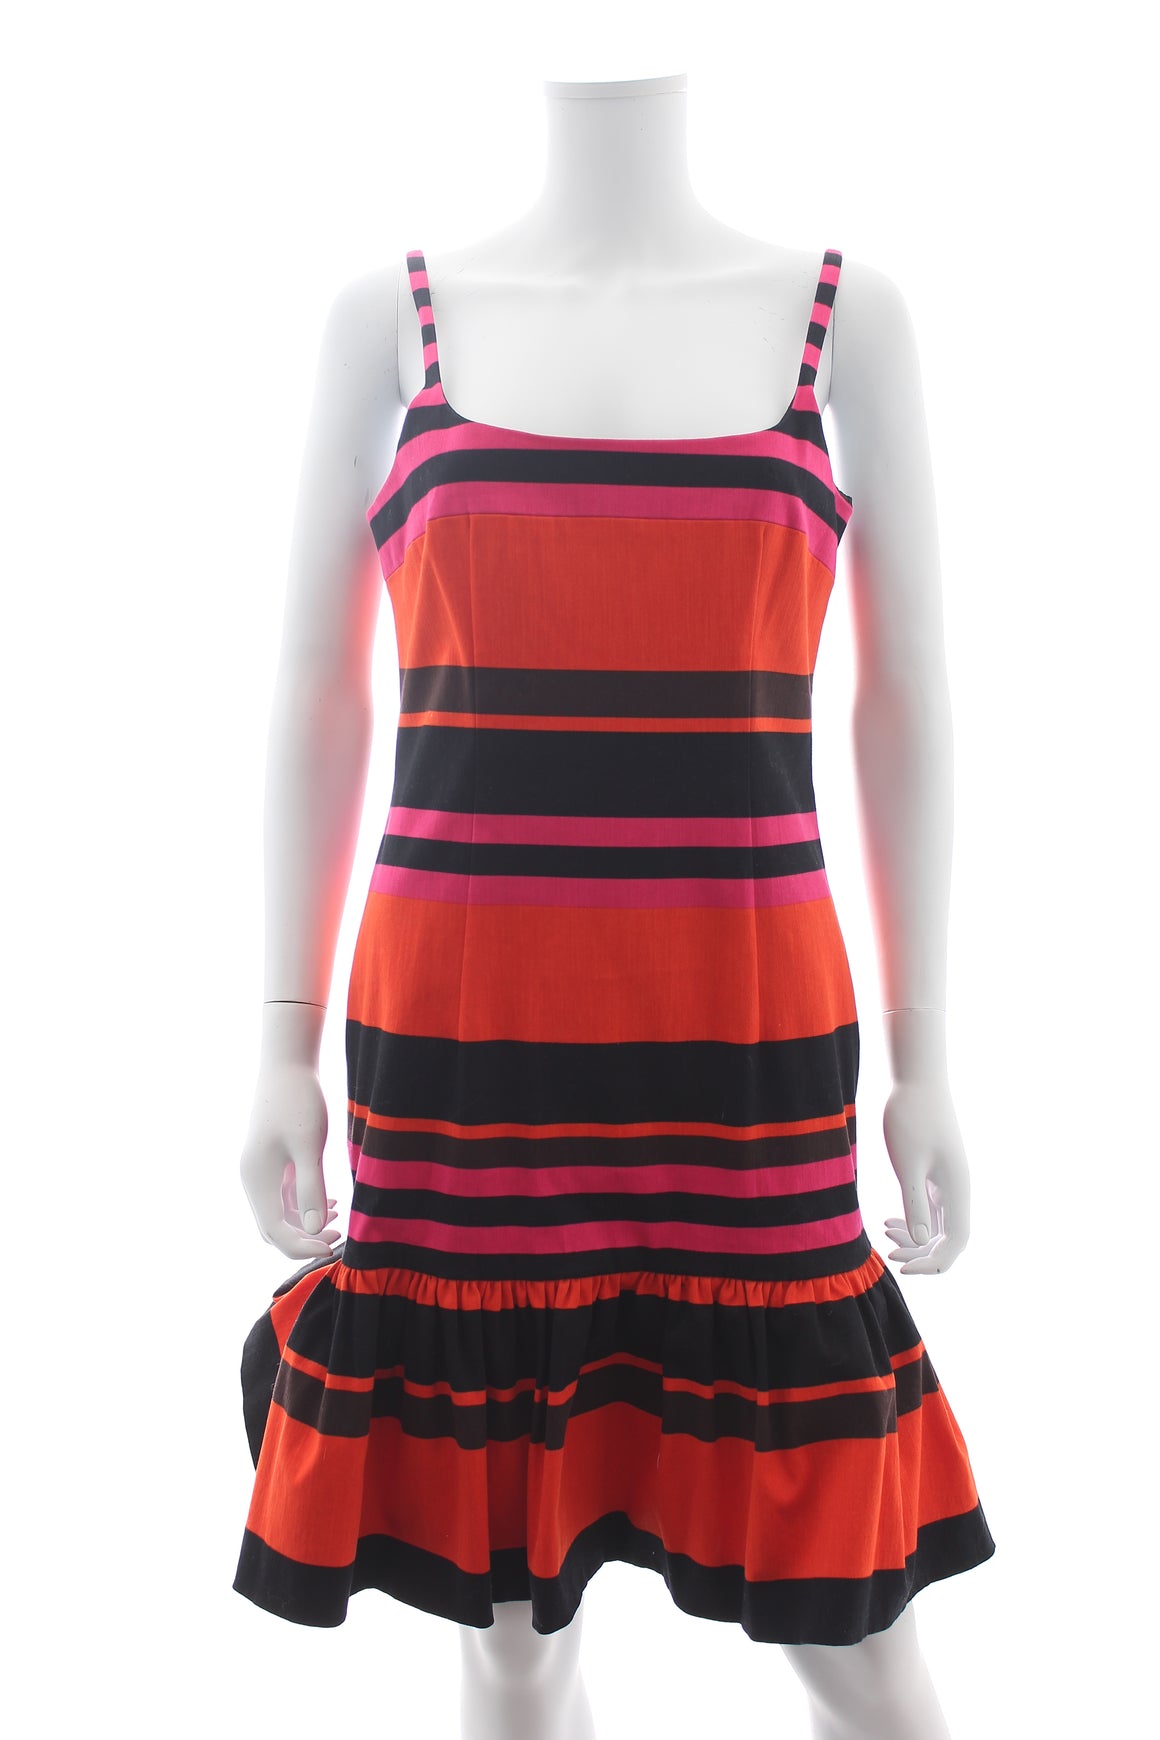 Prada Striped Stretch-Cotton Peplum-Hem Dress